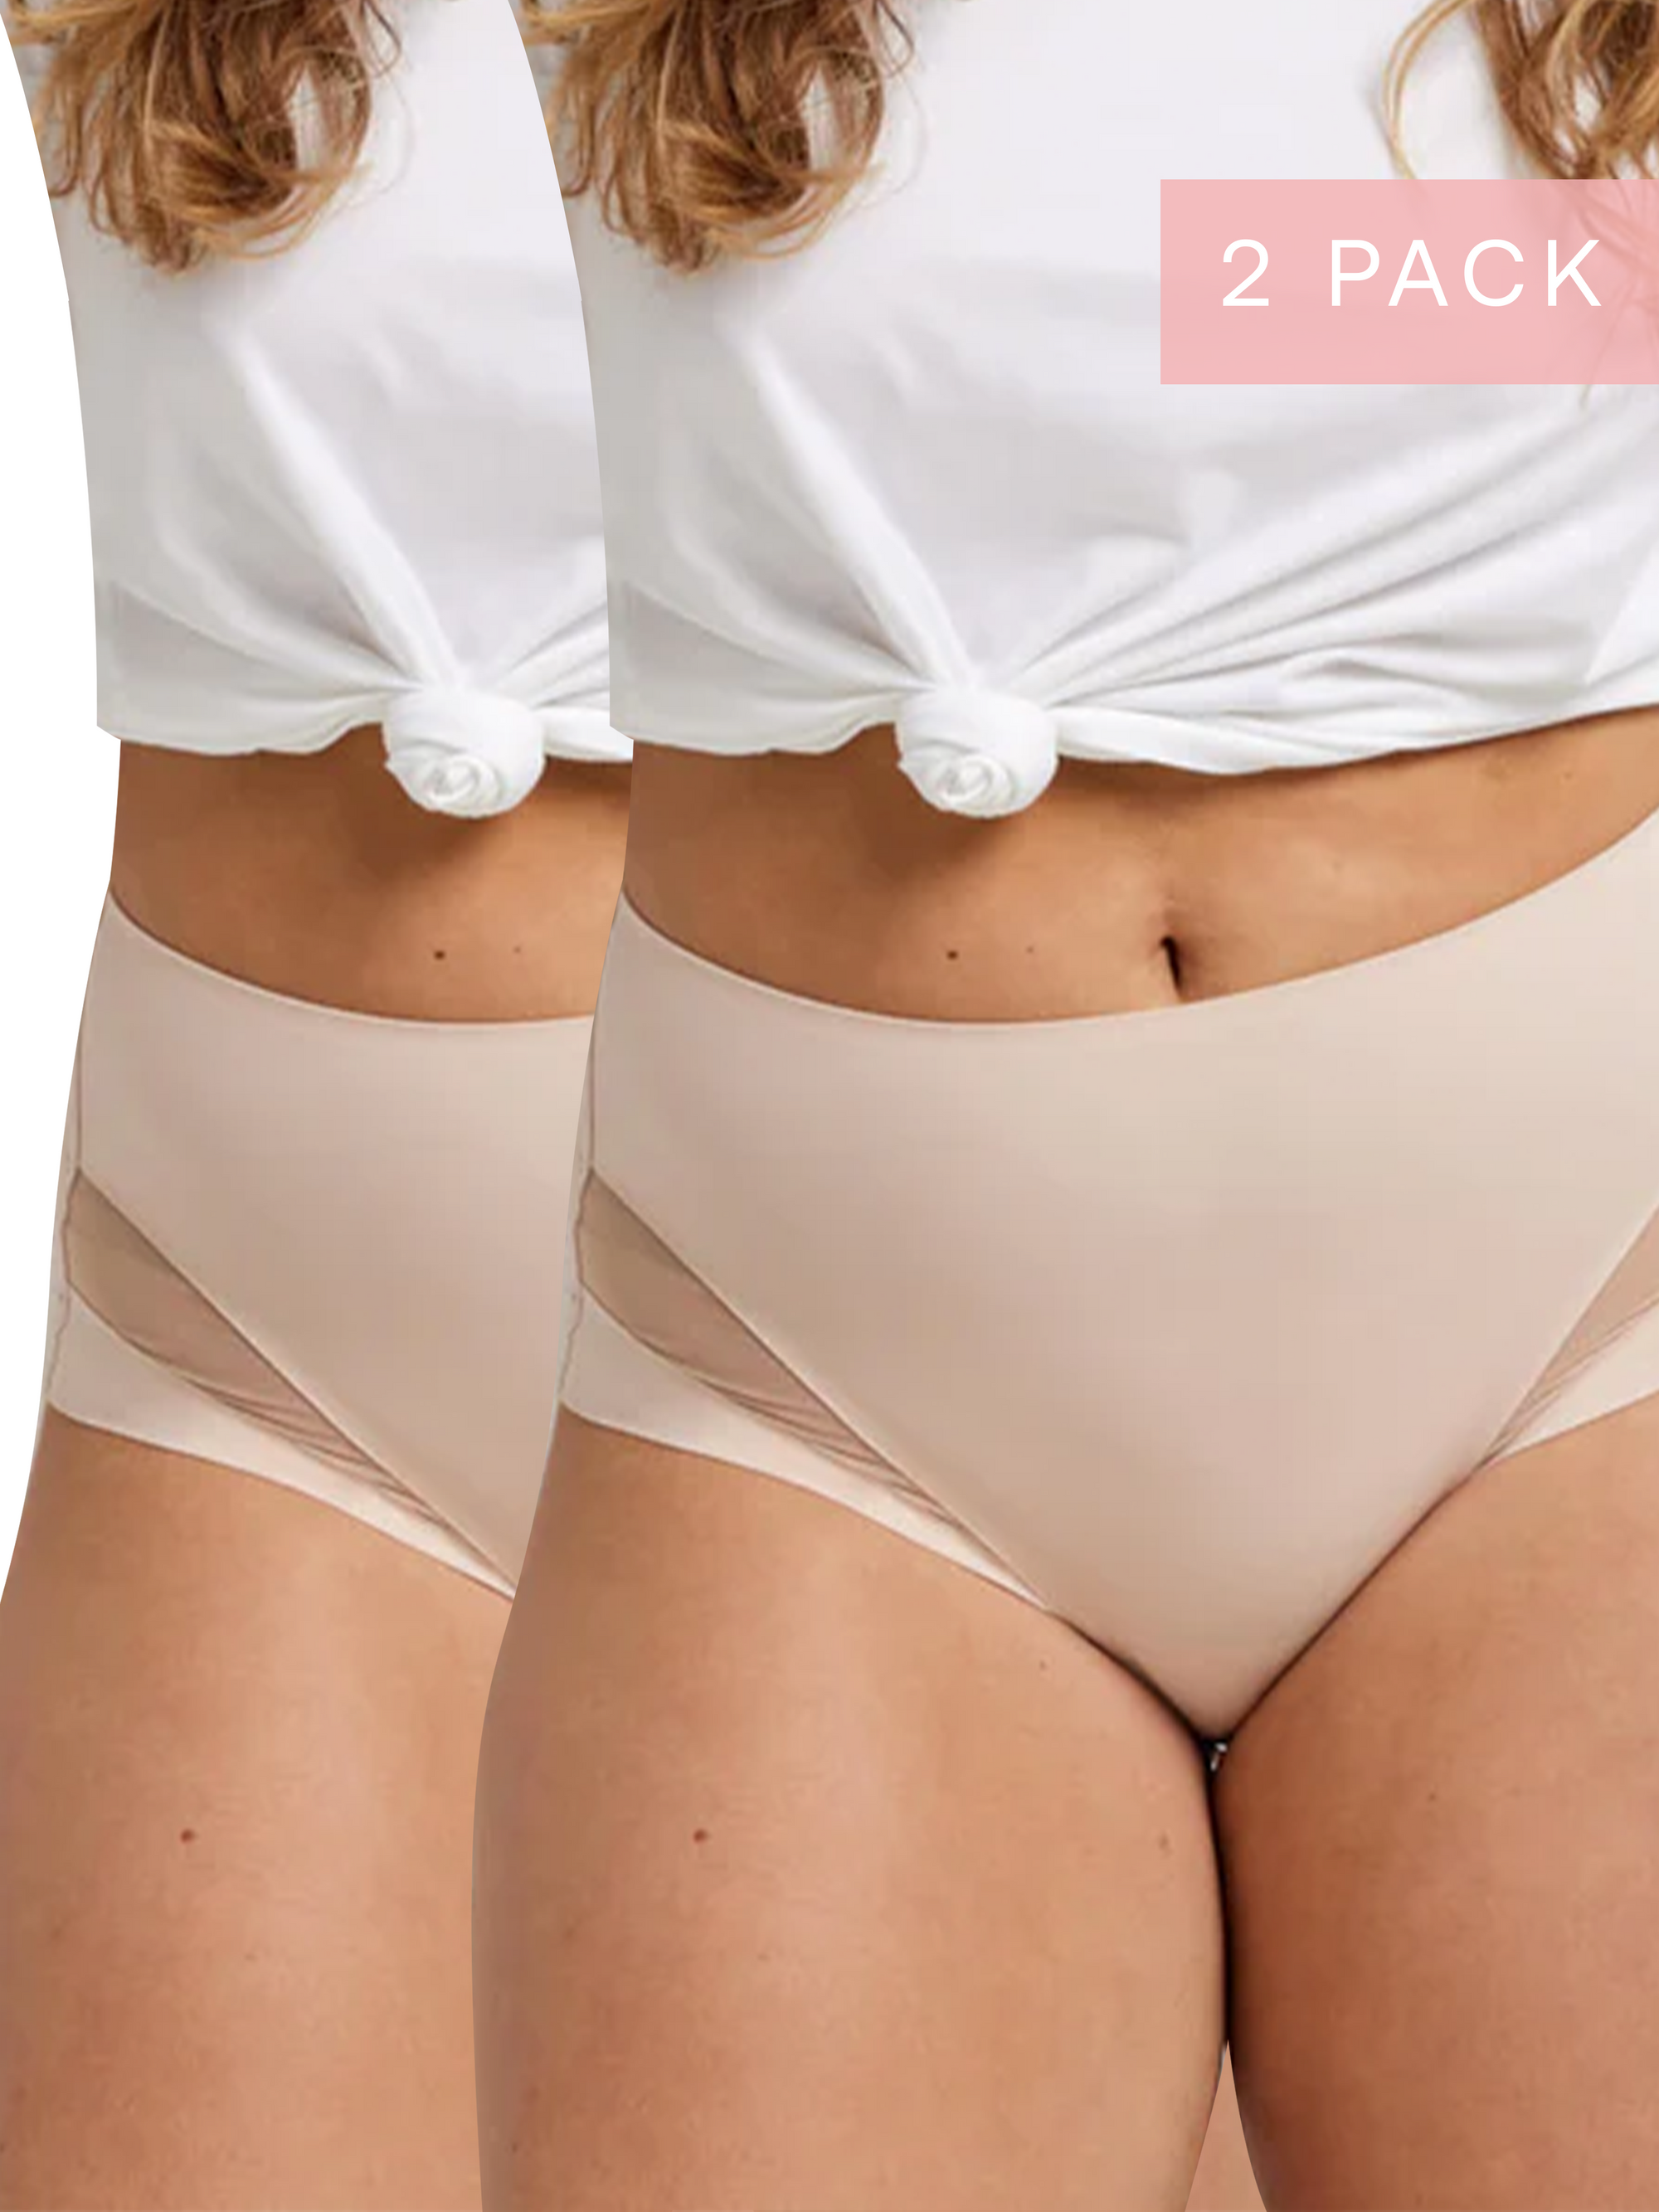 2 Pack Sleek & Smooth Full Brief Underwear in Blush by Kayser Lingerie